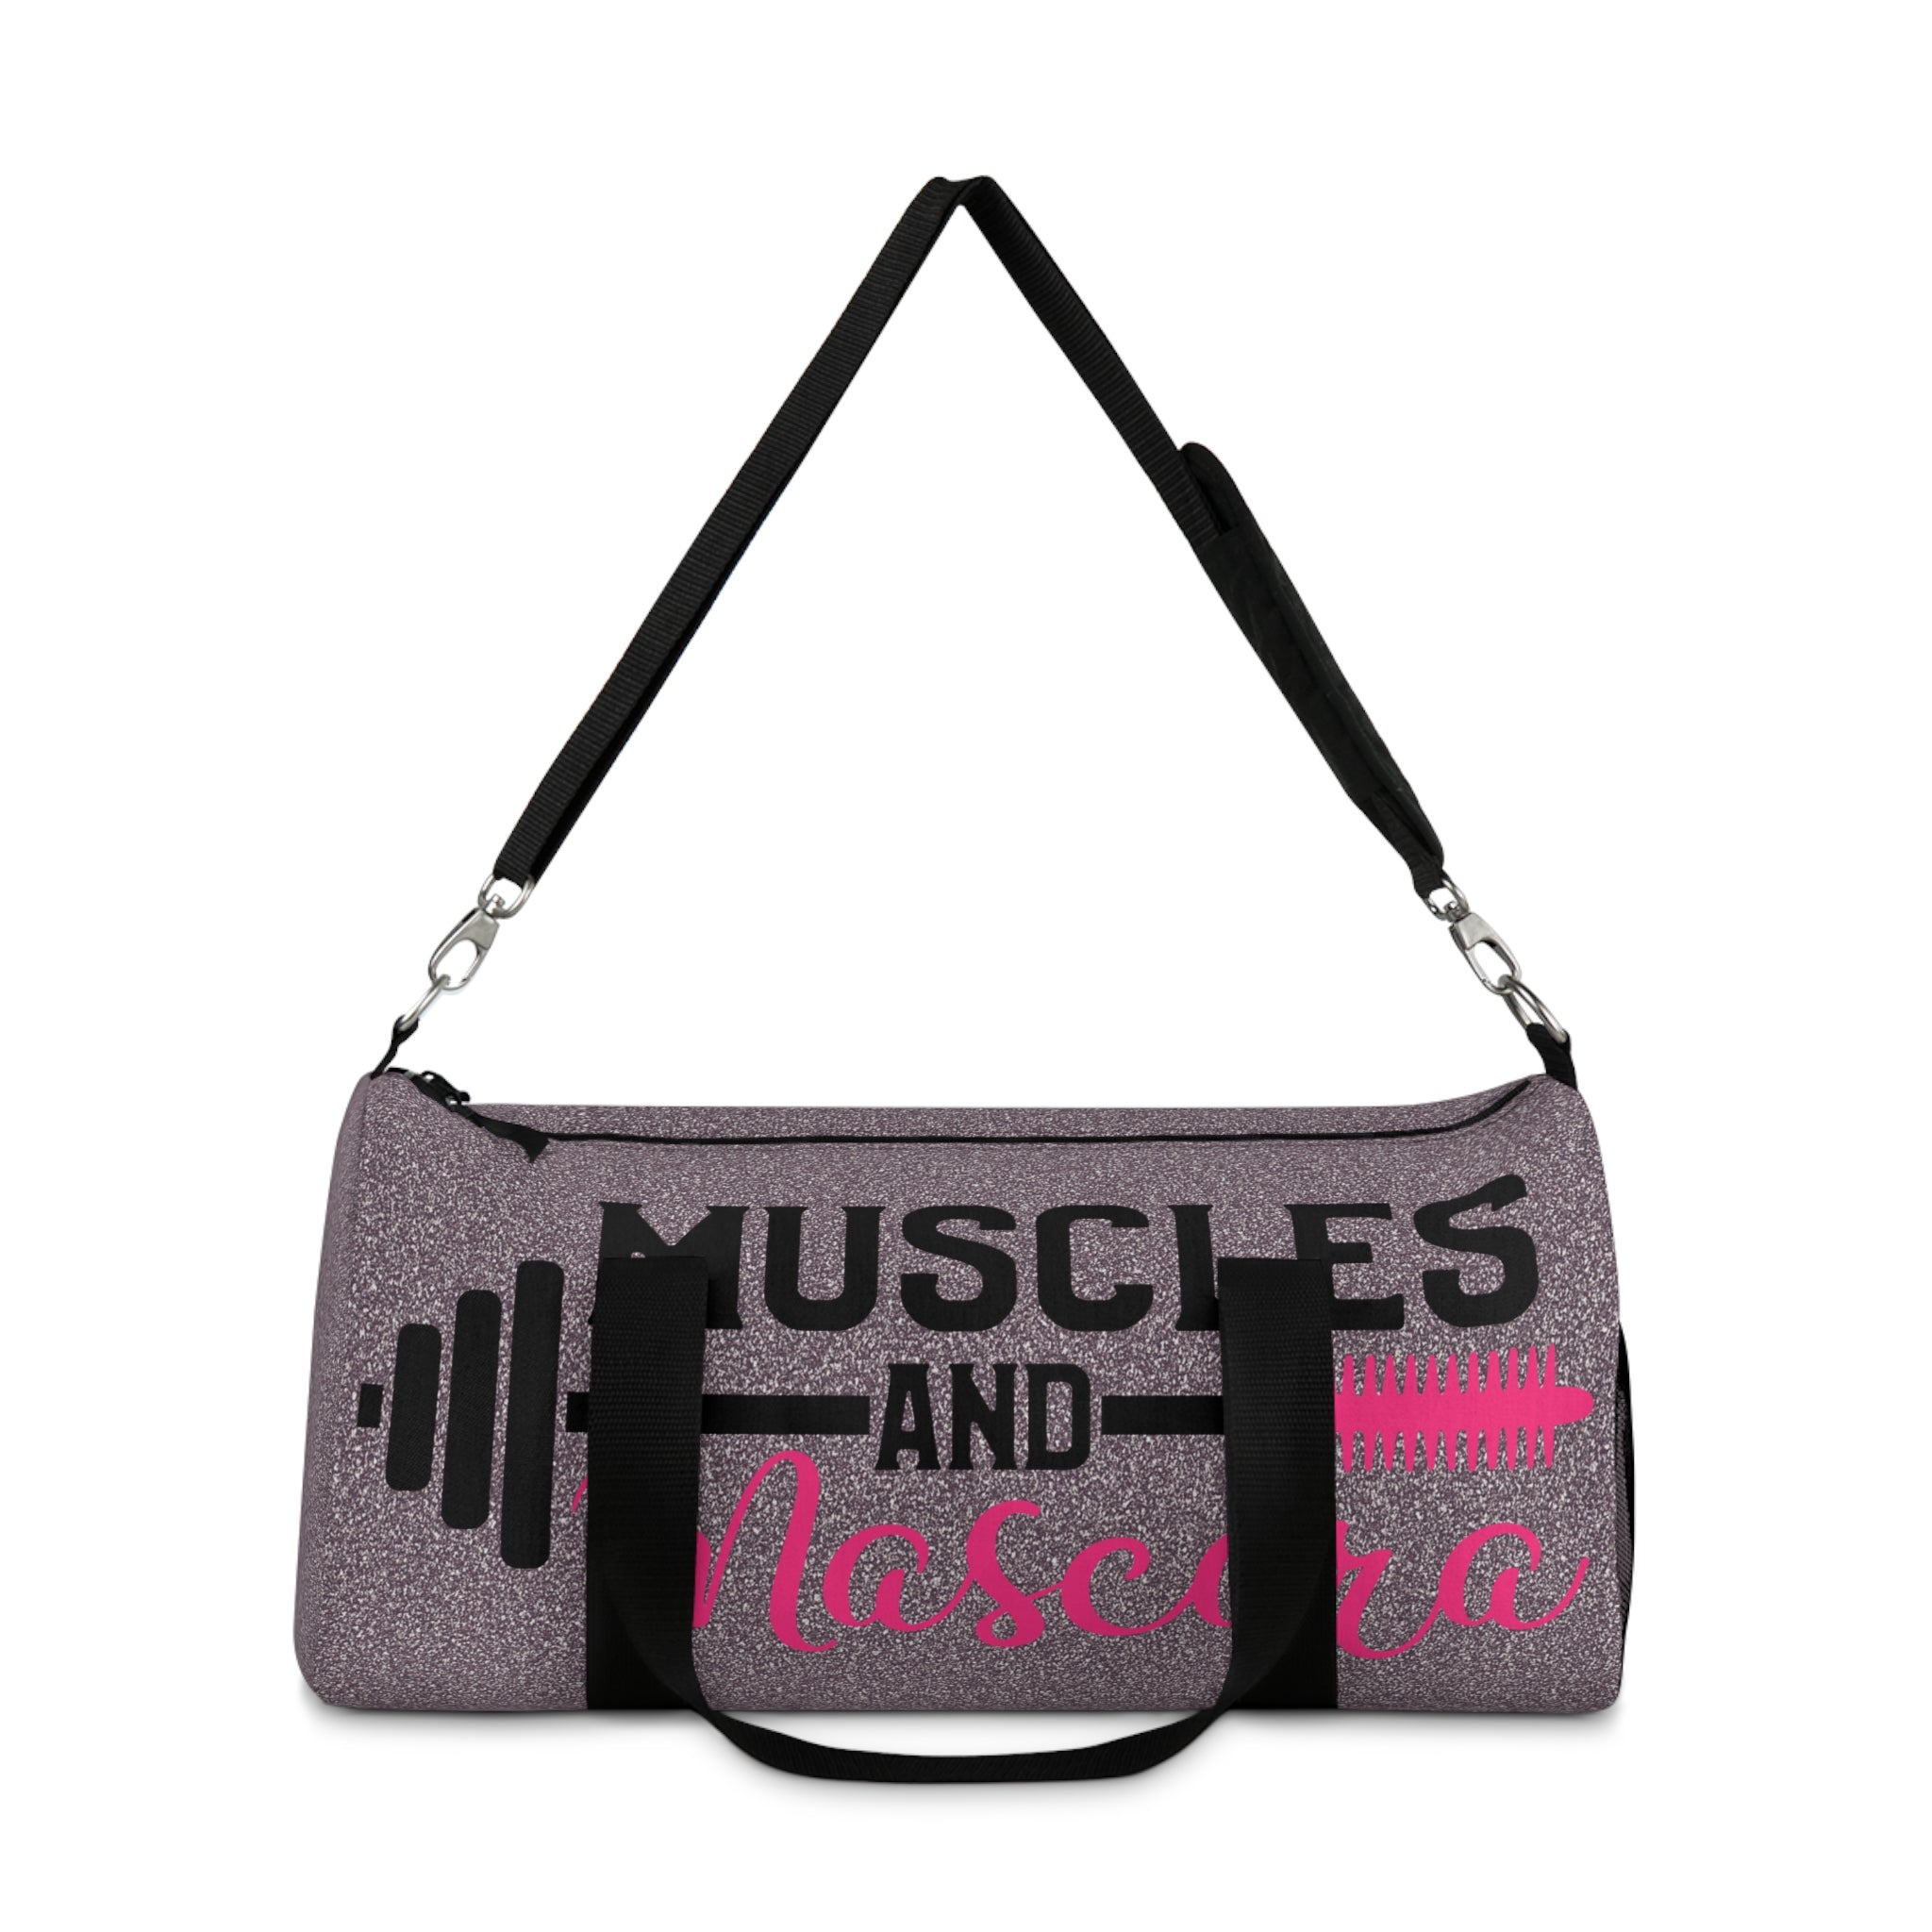 Muscles and Mascara Duffel Bag